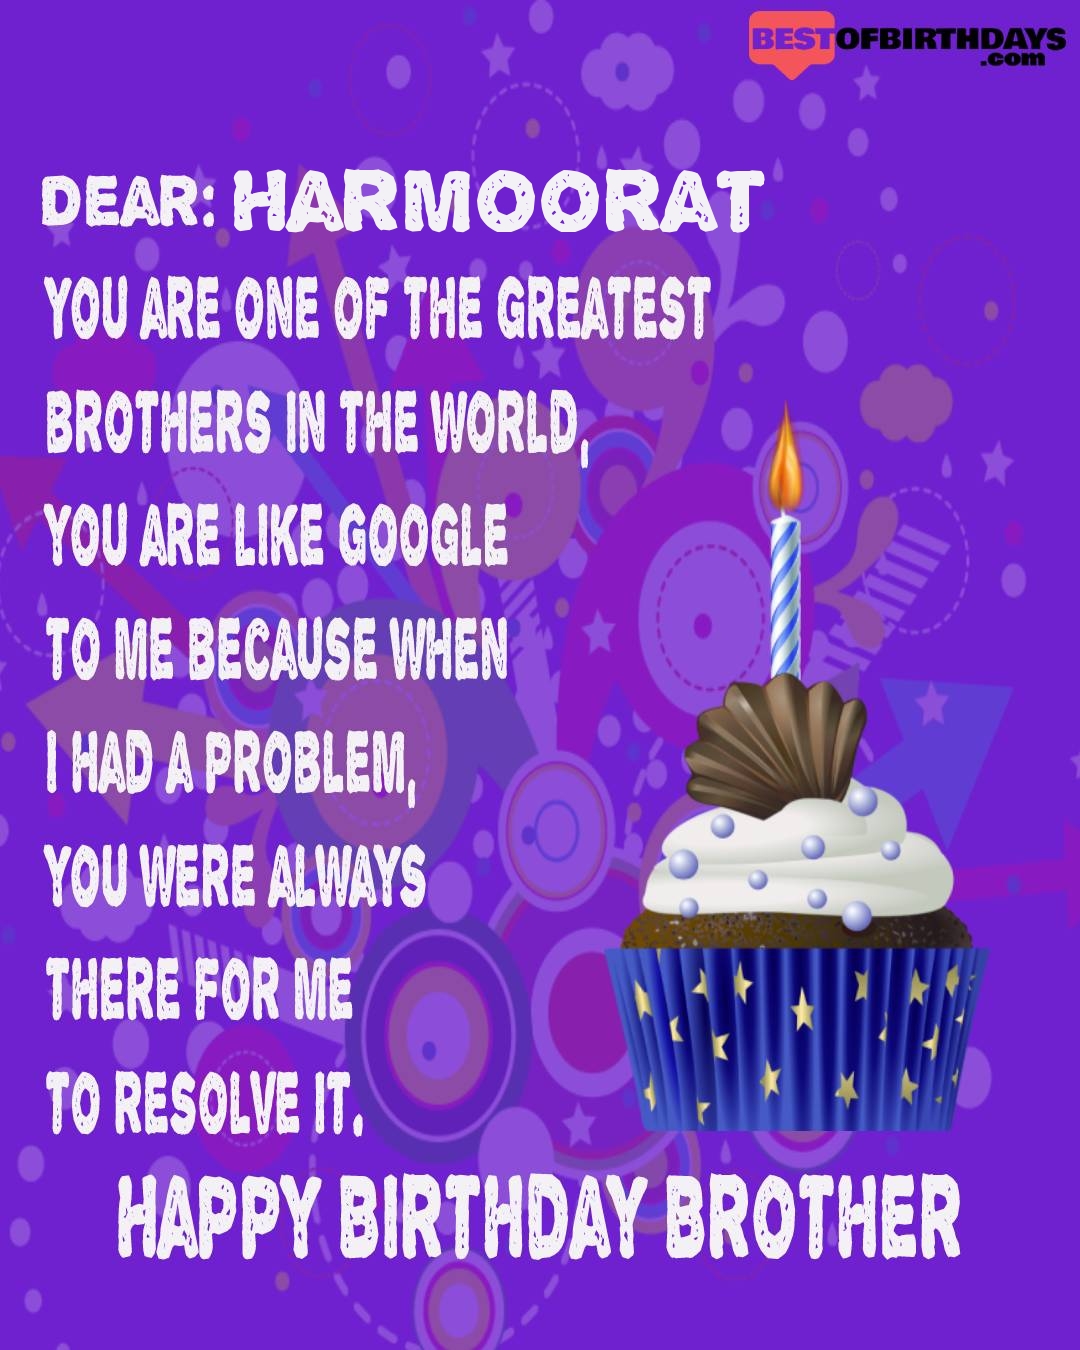 Happy birthday harmoorat bhai brother bro